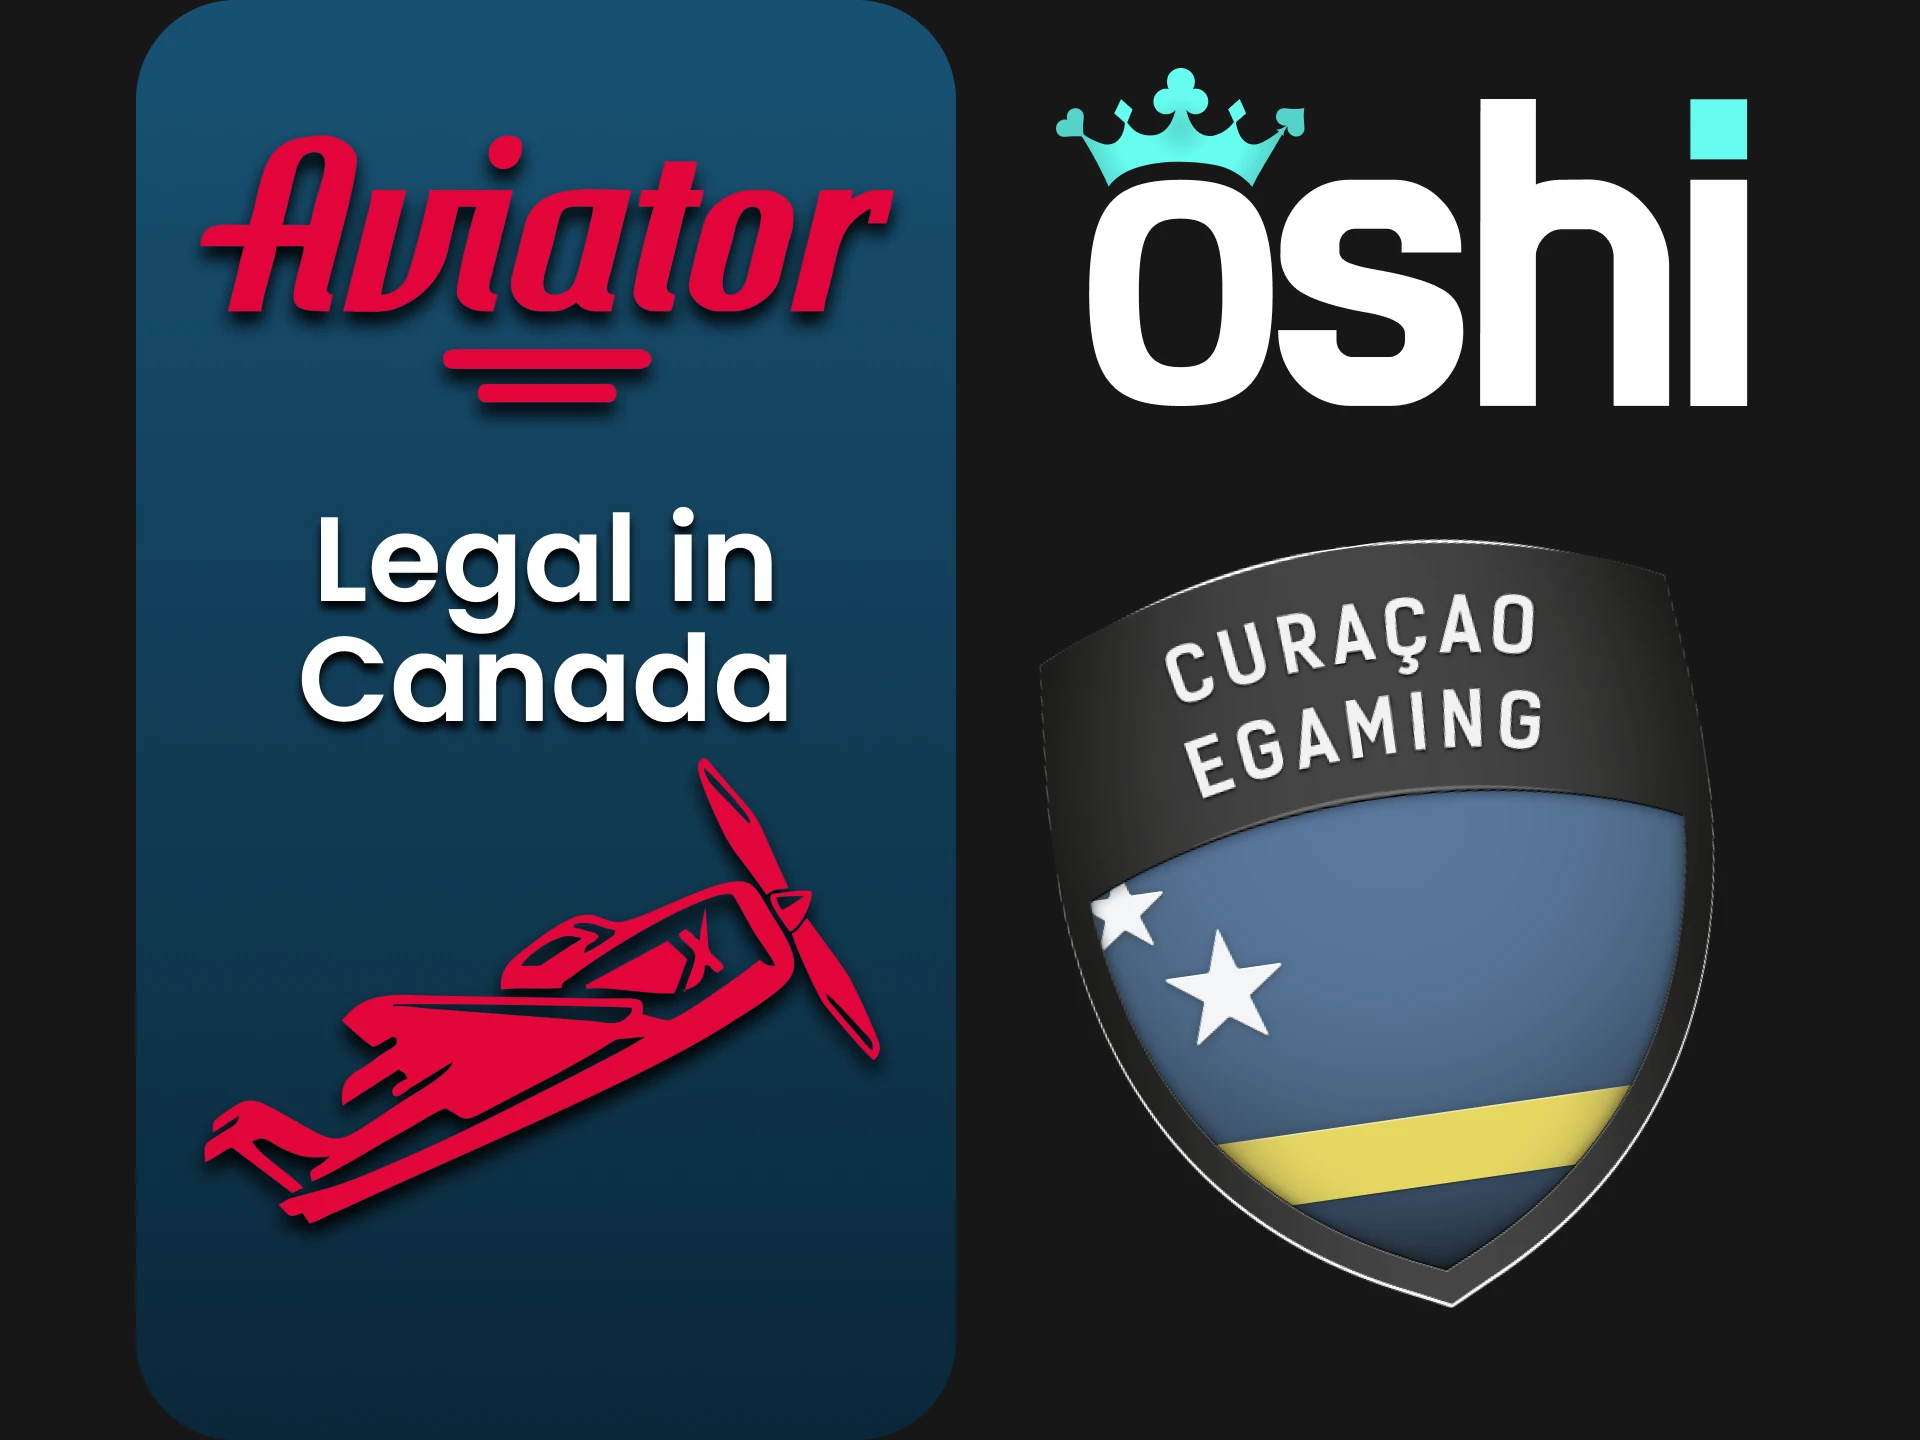 Oshi Casino has a license for the Aviator game.